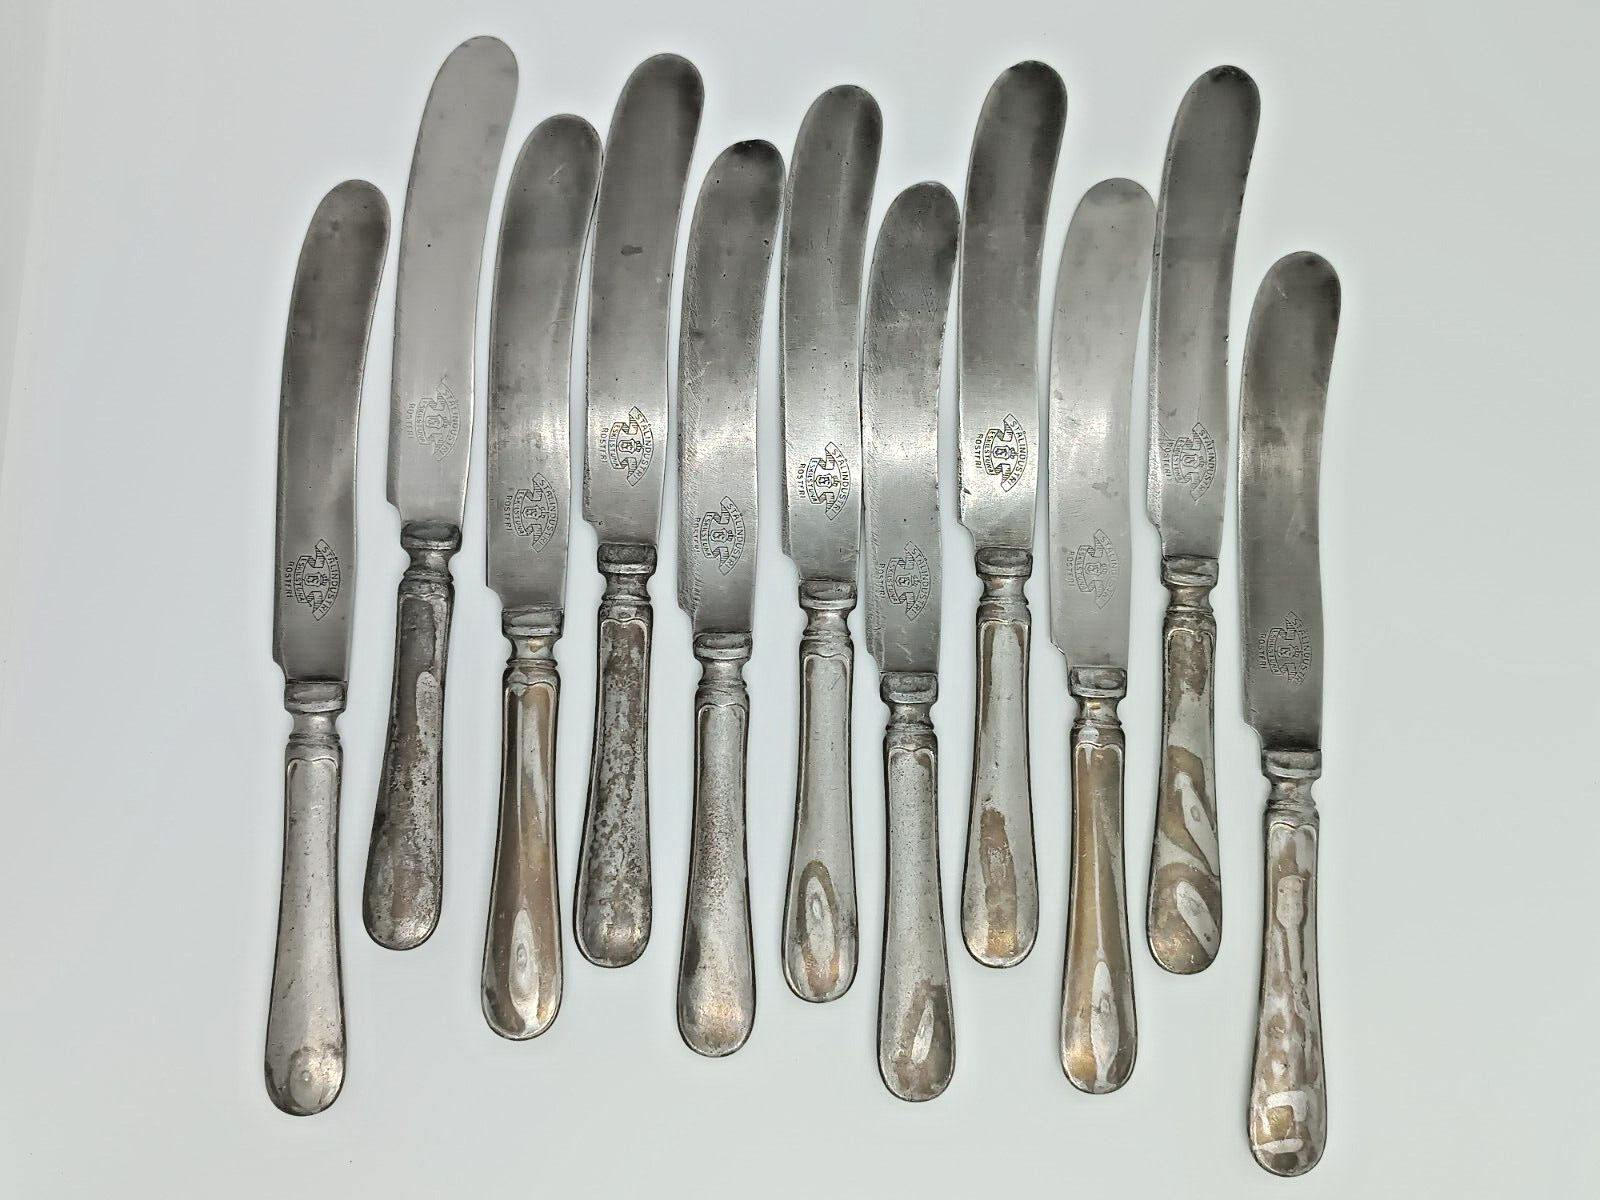 Set of 11 Vintage Stalindustri Eskilstuna kitchen Knife